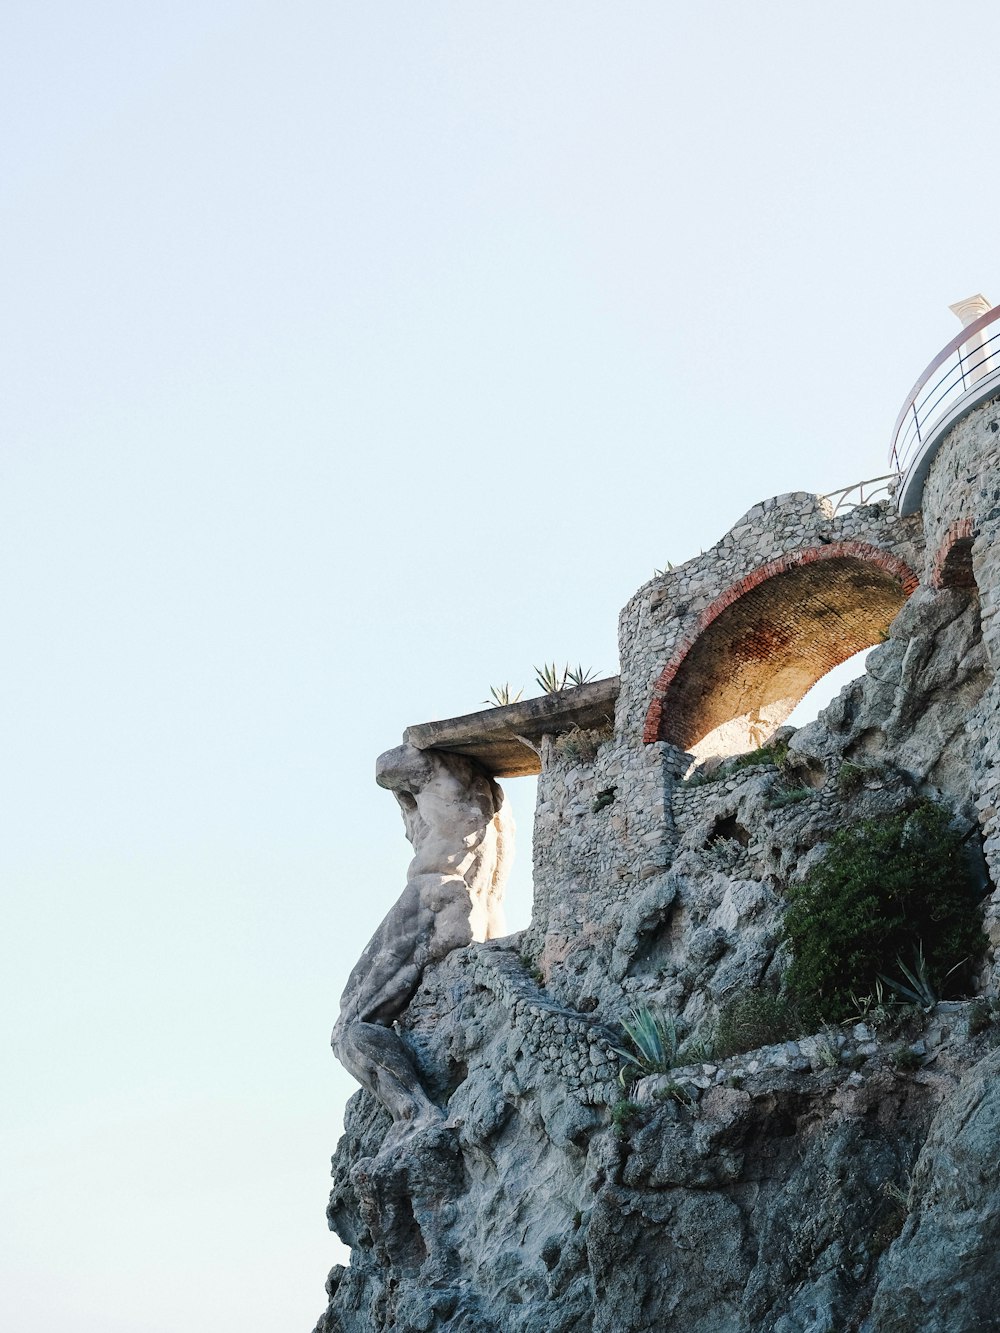 stone structure near cliff